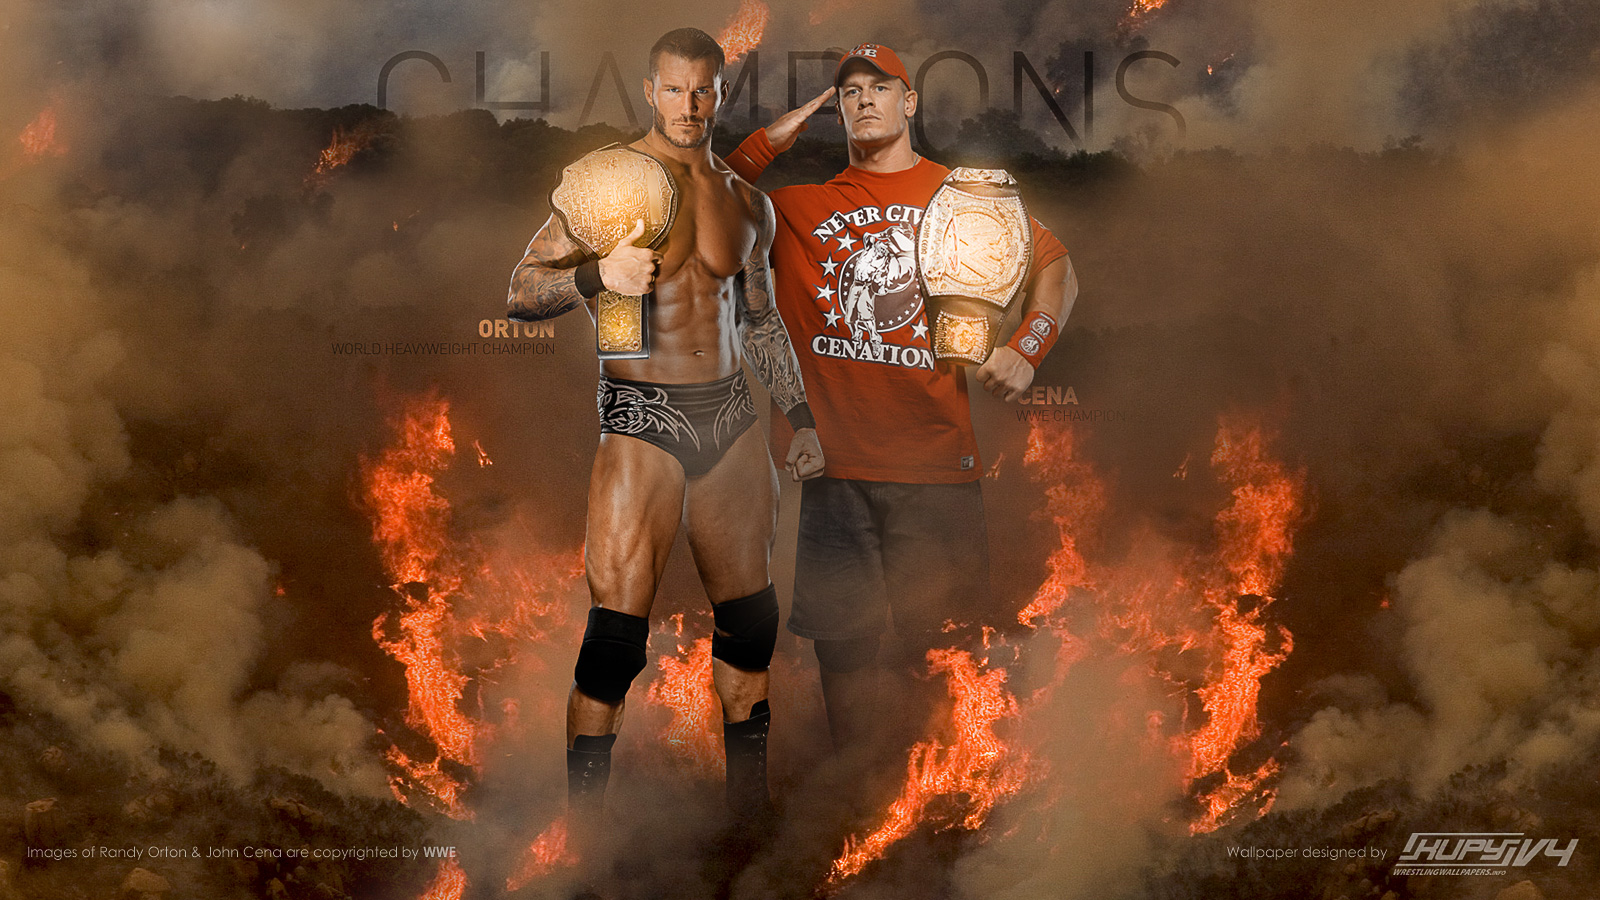 NEW Randy Orton and John Cena wallpaper! - Kupy Wrestling Wallpapers